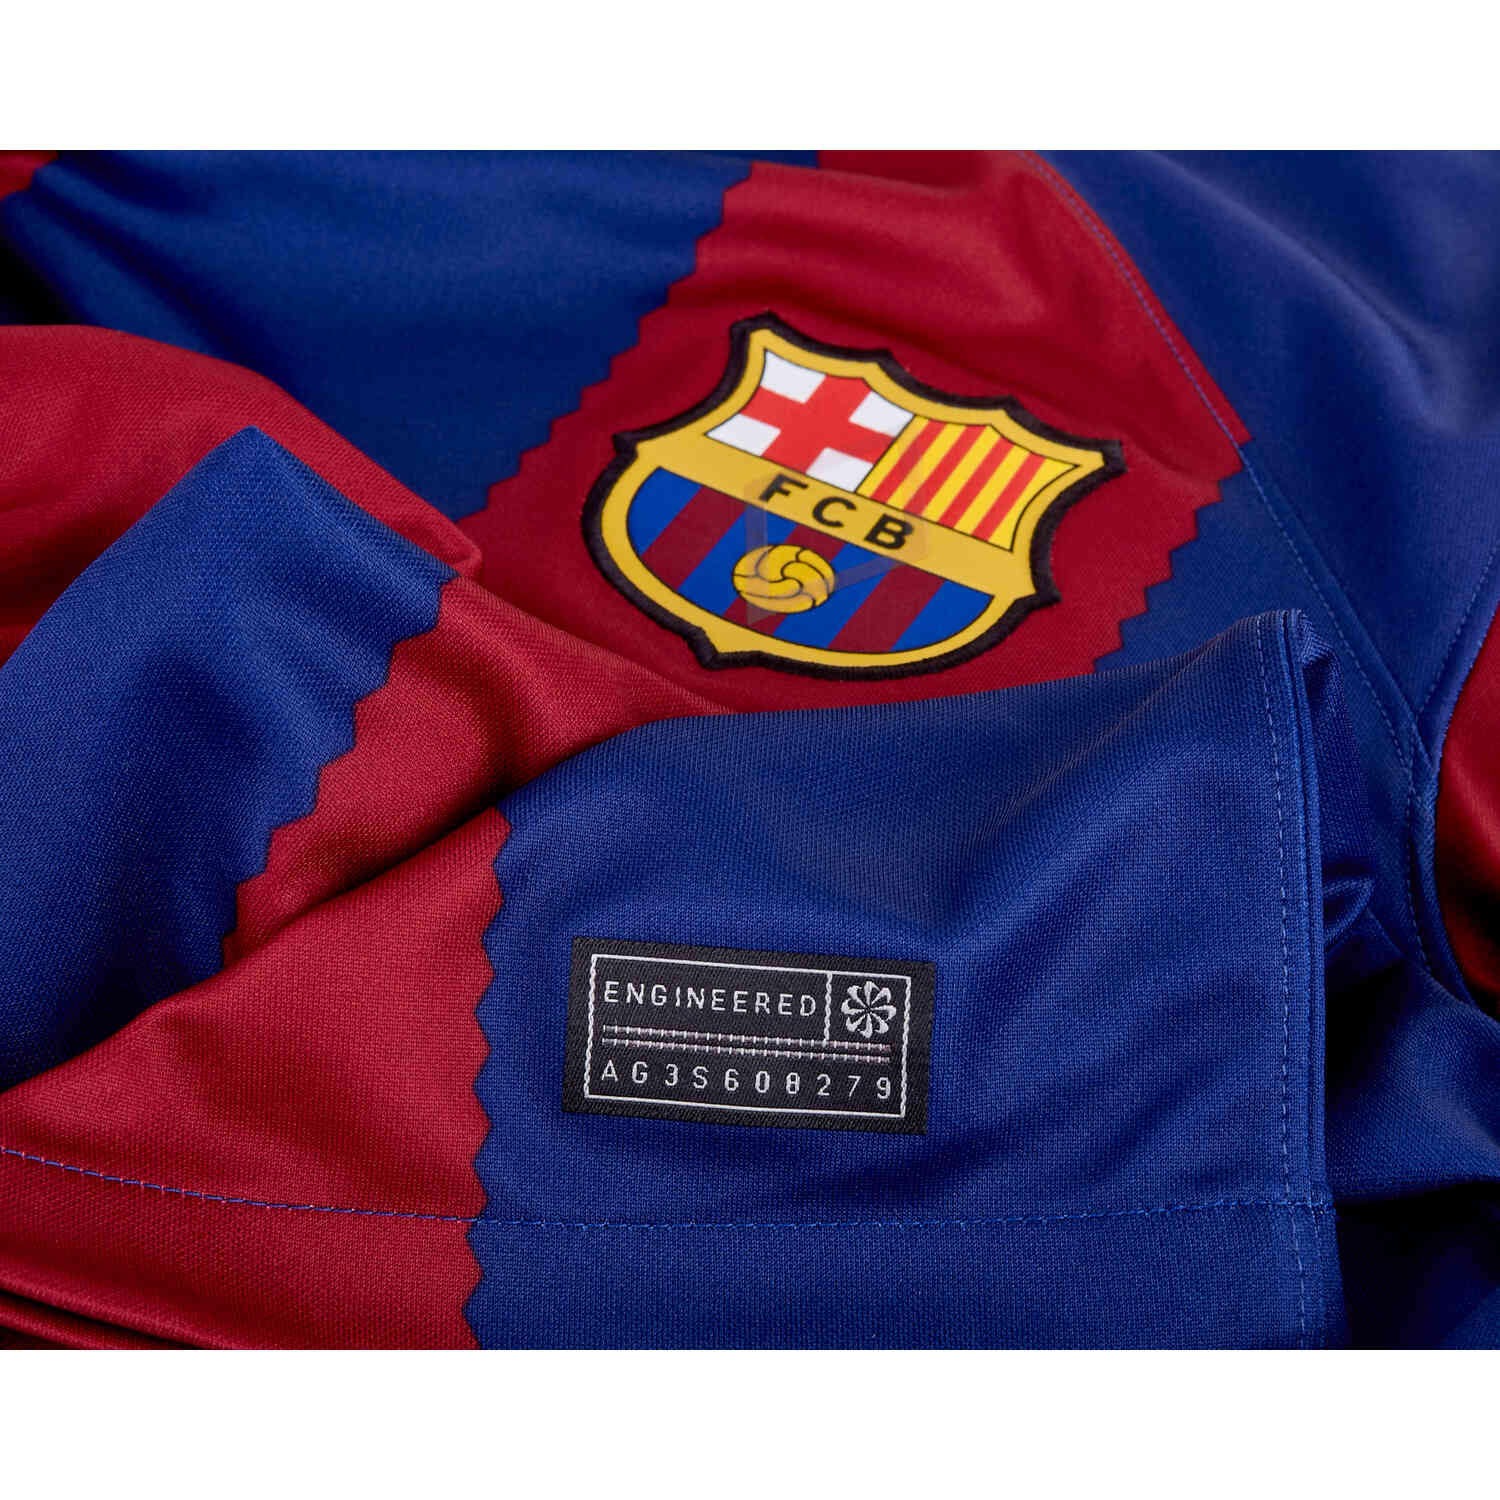 2023/2024 Nike Barcelona Home Jersey - SoccerPro